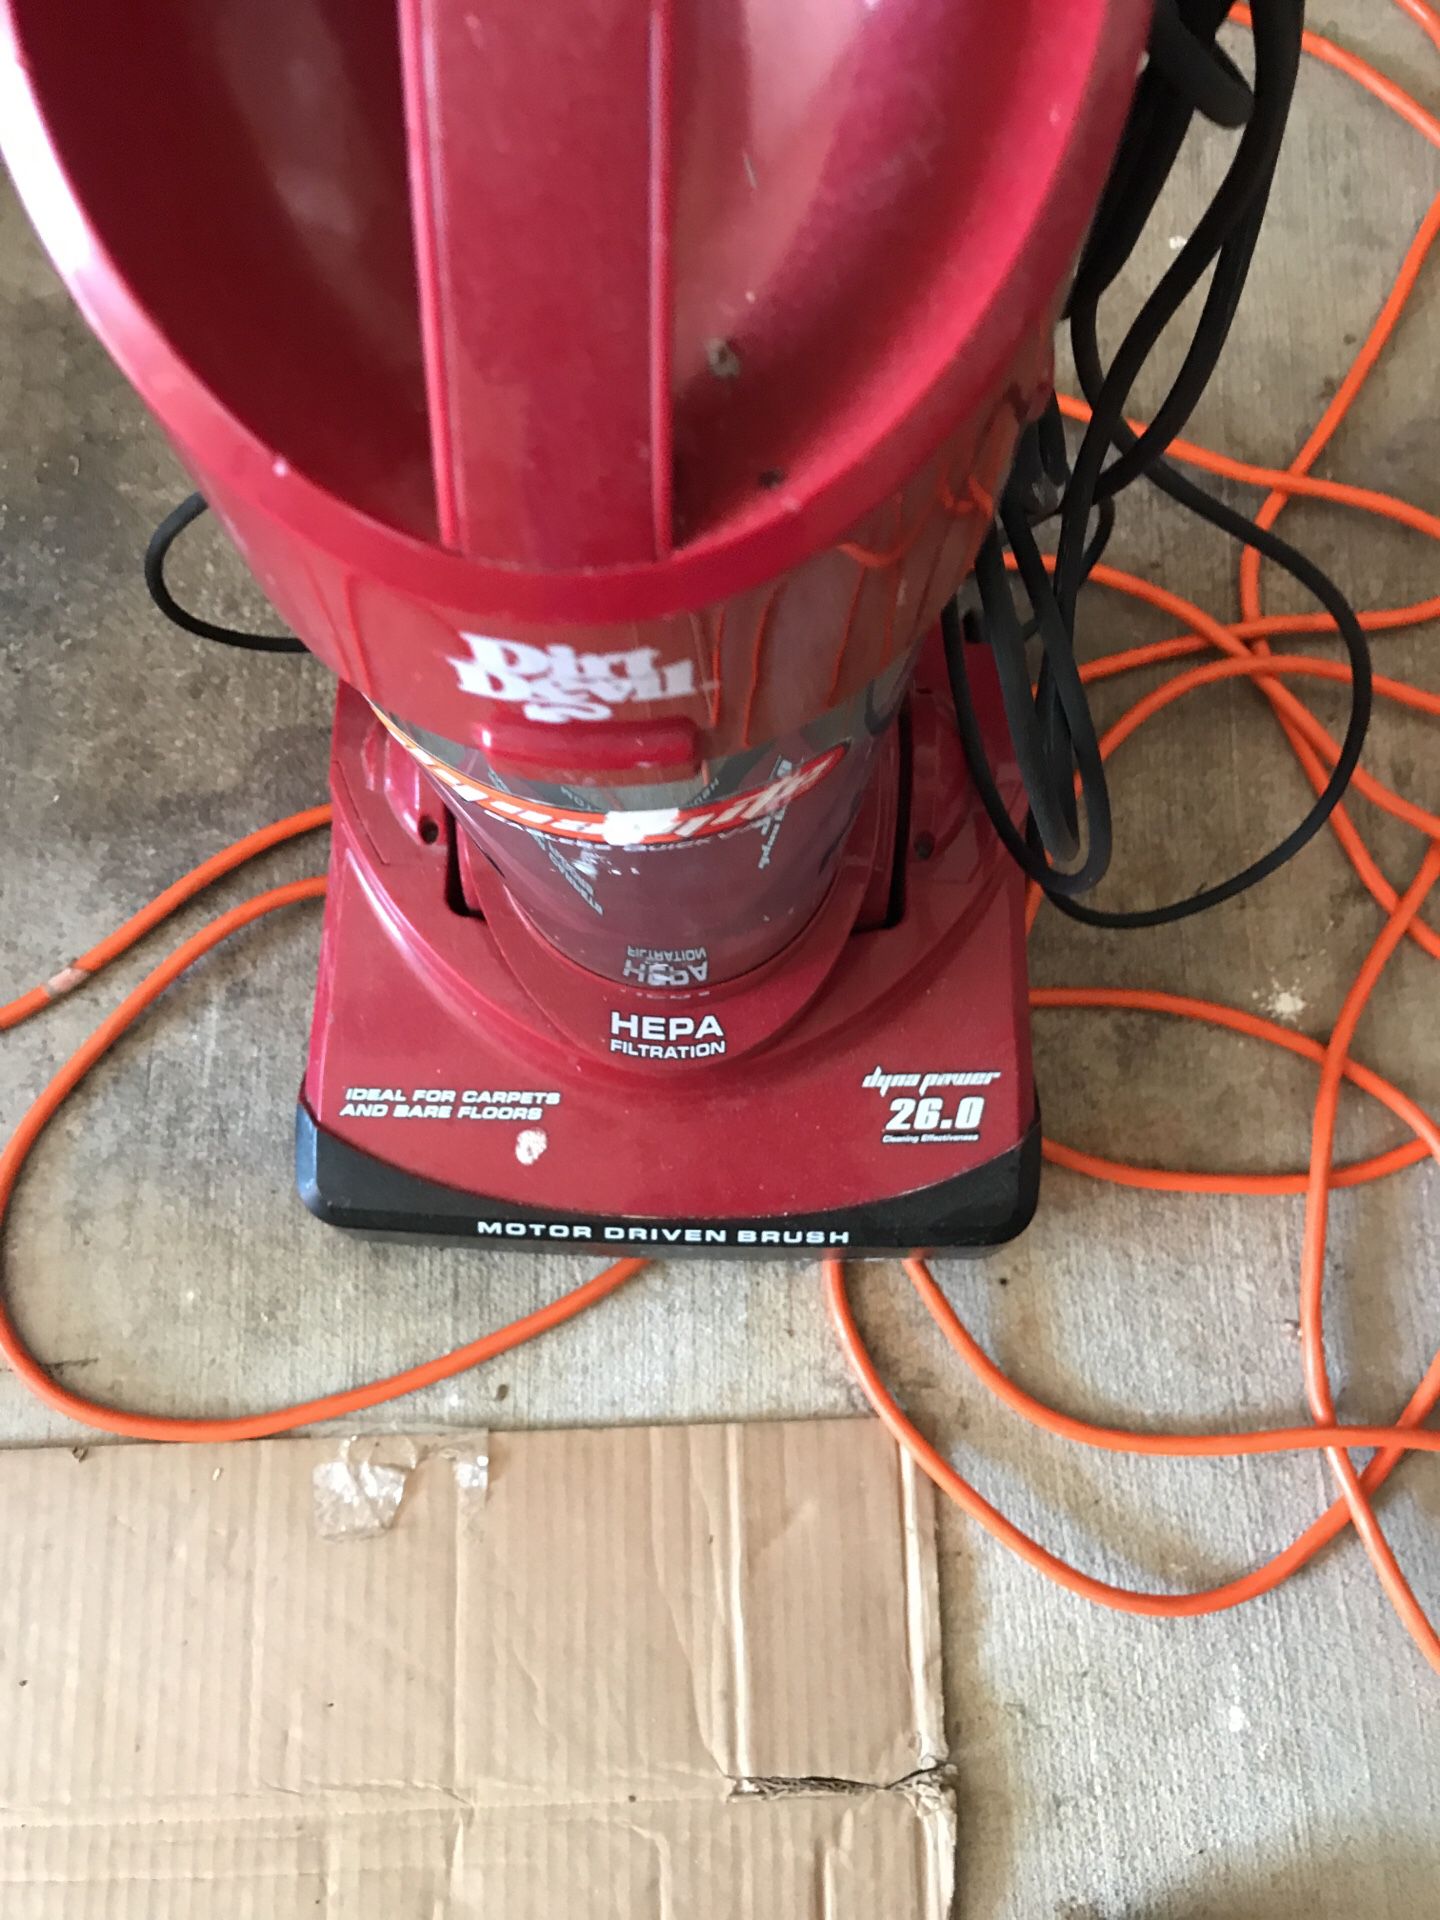 A Dirt devil vacuum cleaner.